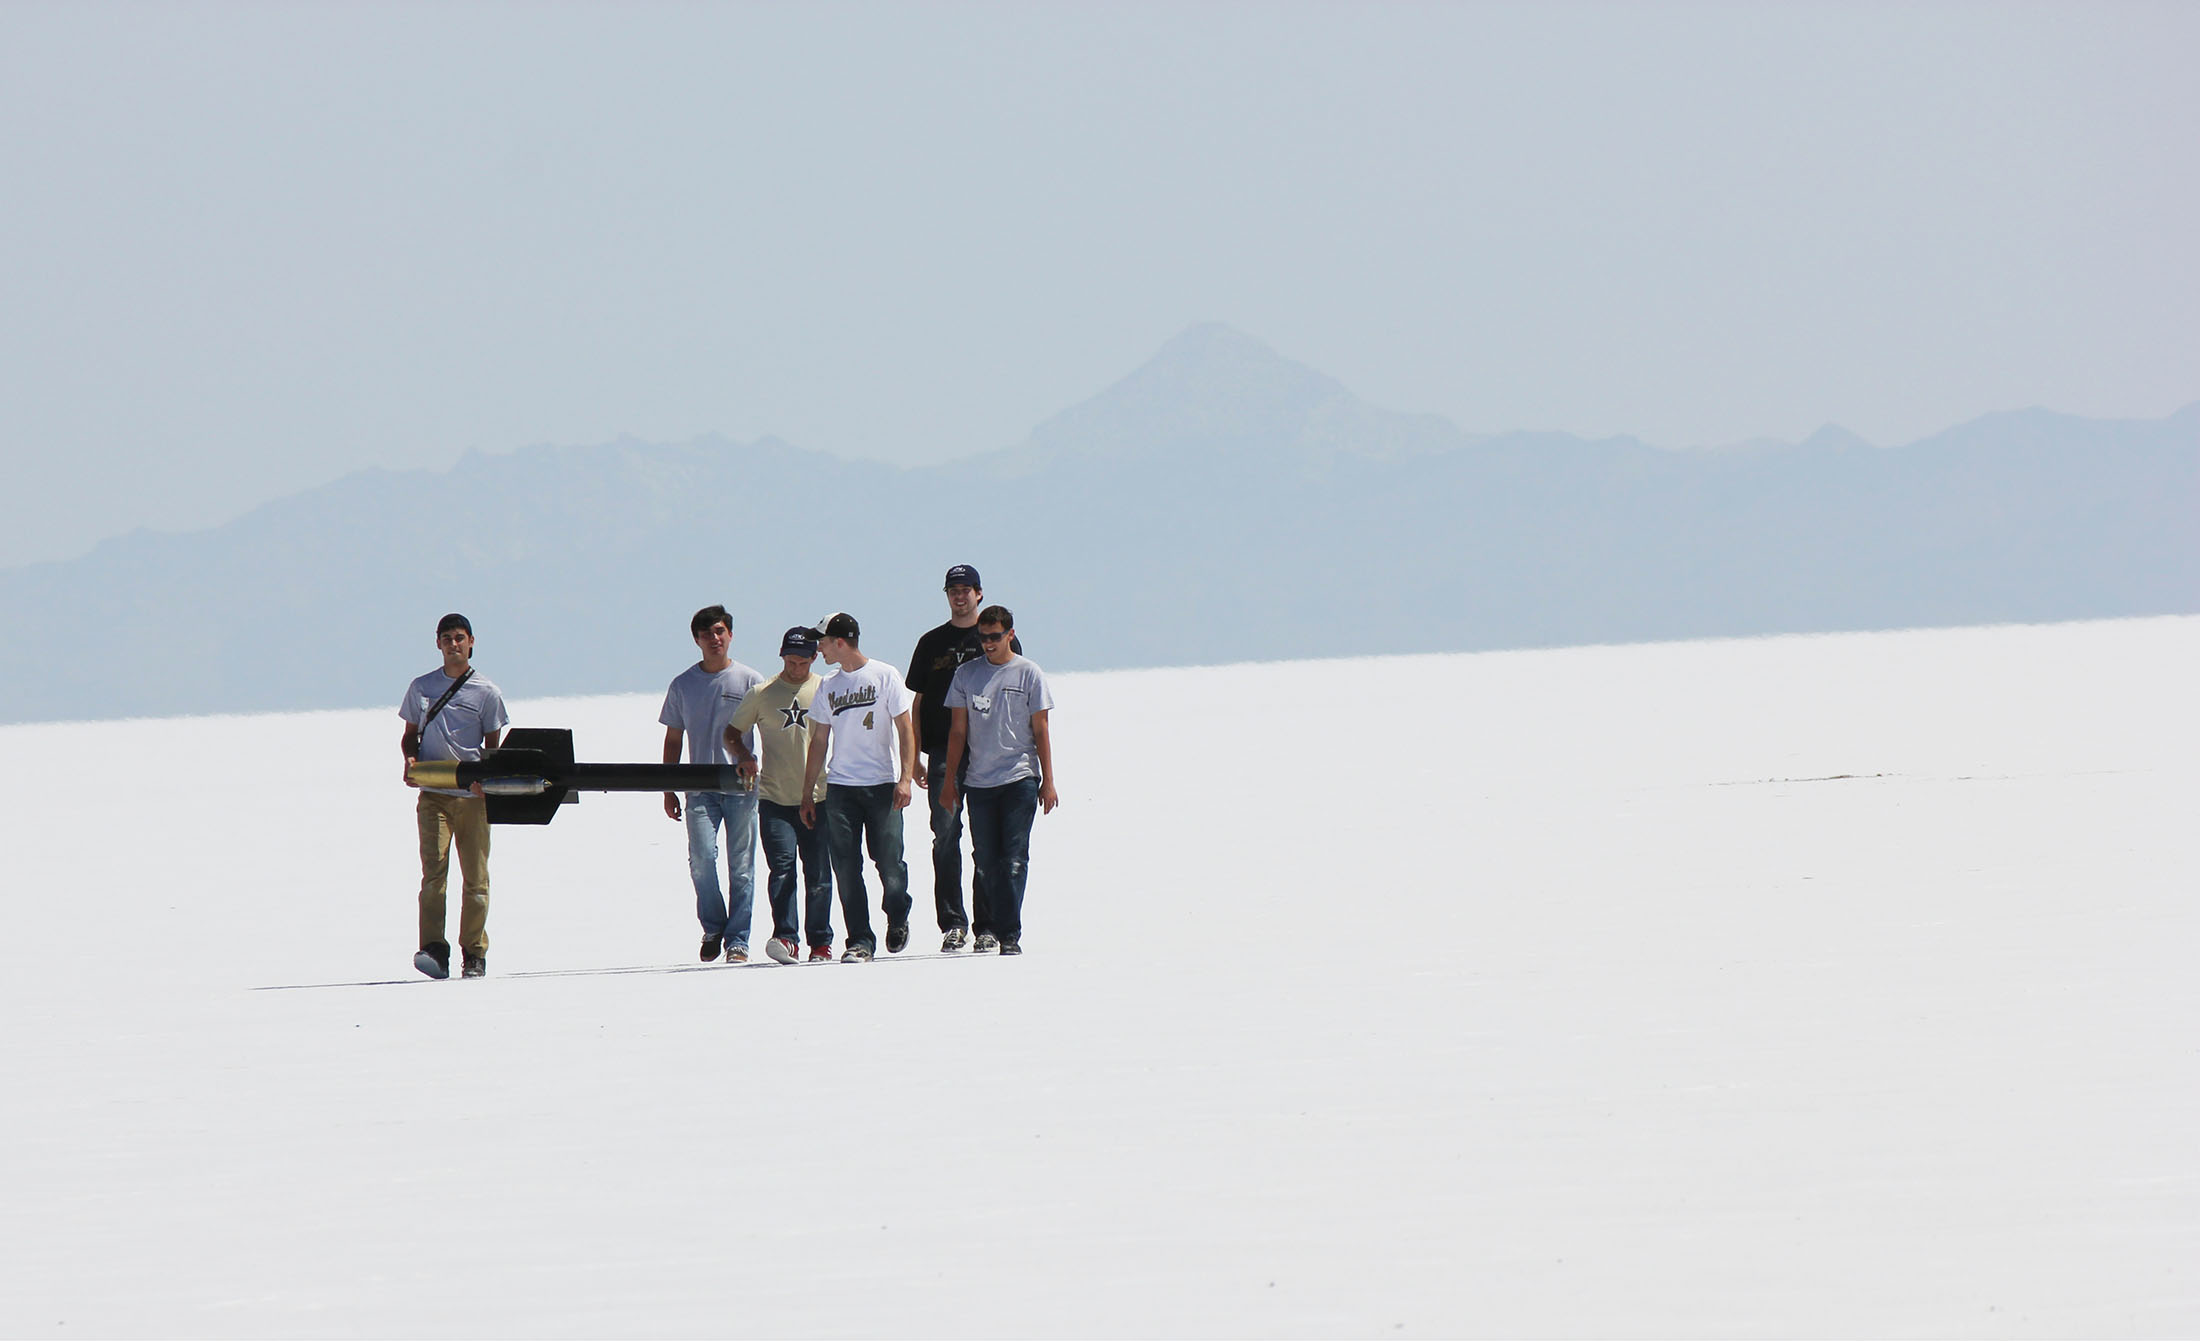 Student rocketeers on the Bonneville Salt Flats of Utah